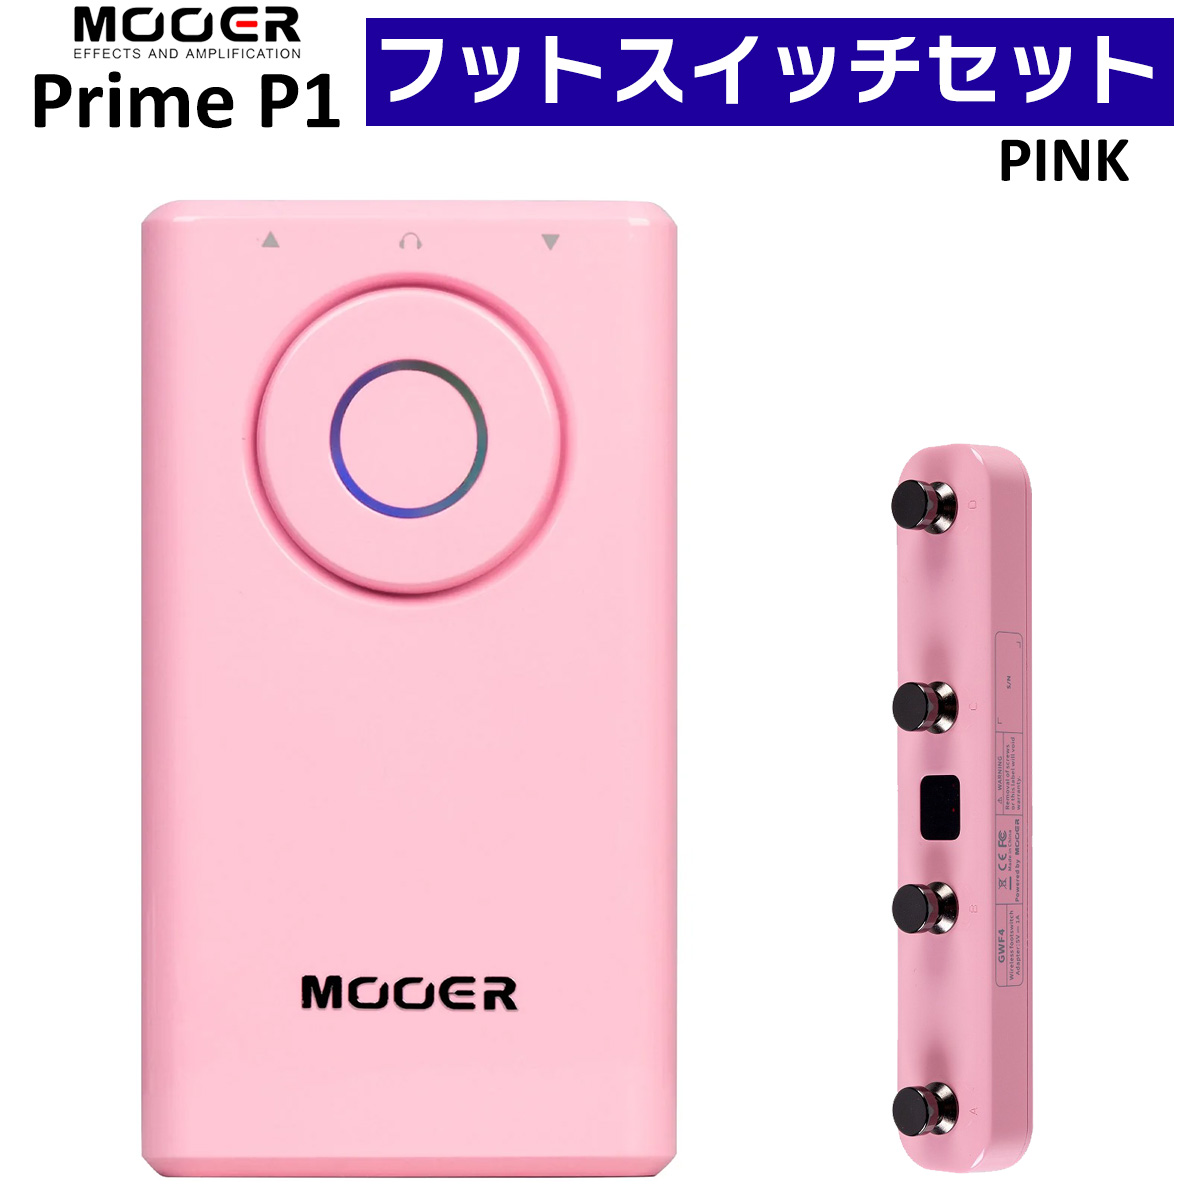 MOOER Prime P1 PINK + GWF4 フットスイッチセット 超小型マルチ ...